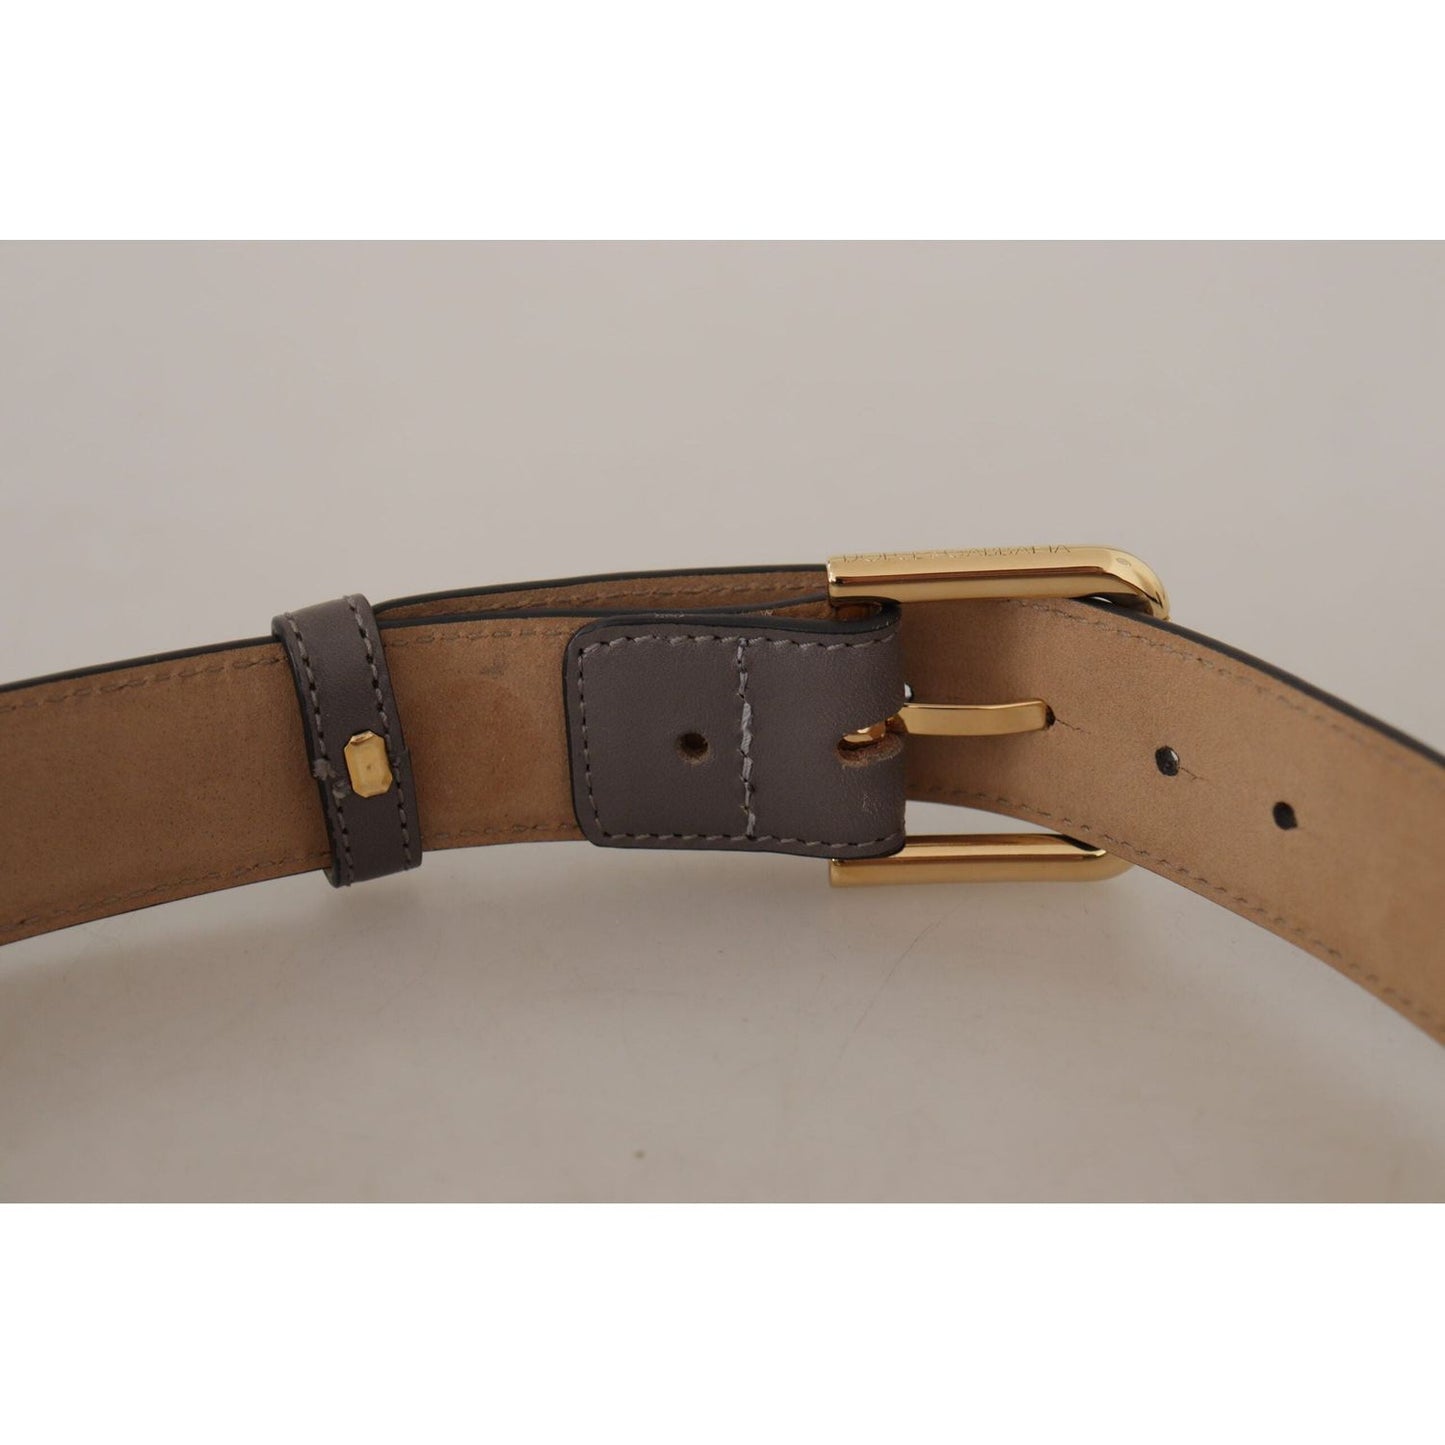 Dolce & Gabbana Elegant Engraved Buckle Leather Belt gray-calfskin-leather-gold-metal-logo-buckle-belt IMG_8911-scaled-8a018d34-286.jpg